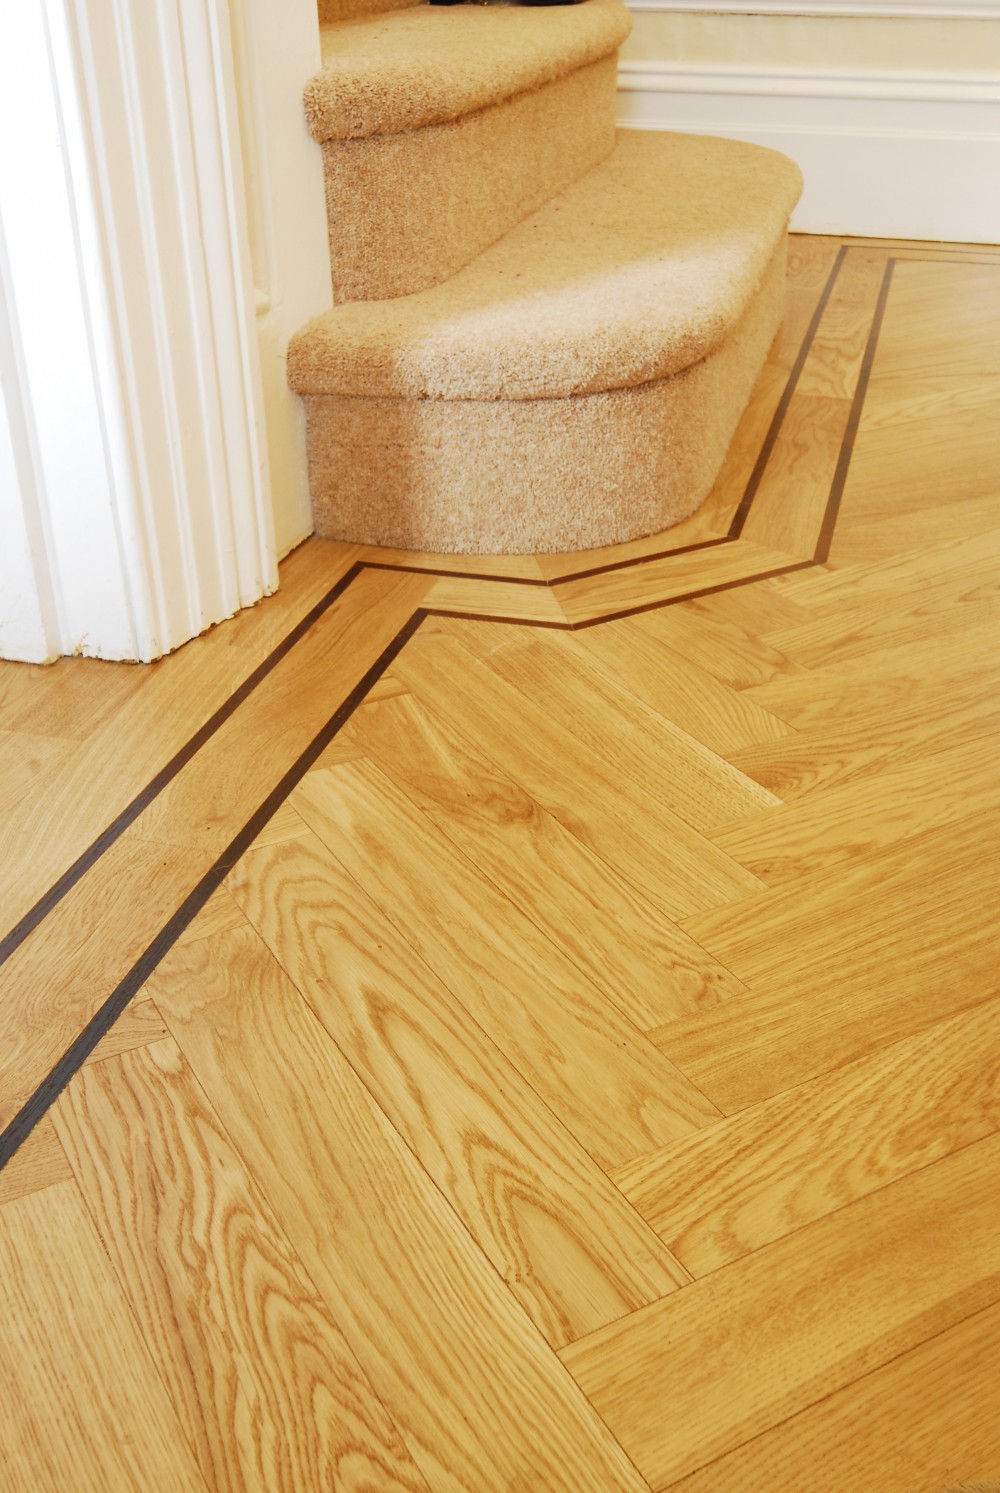 Parquet wood flooring with double strip black border